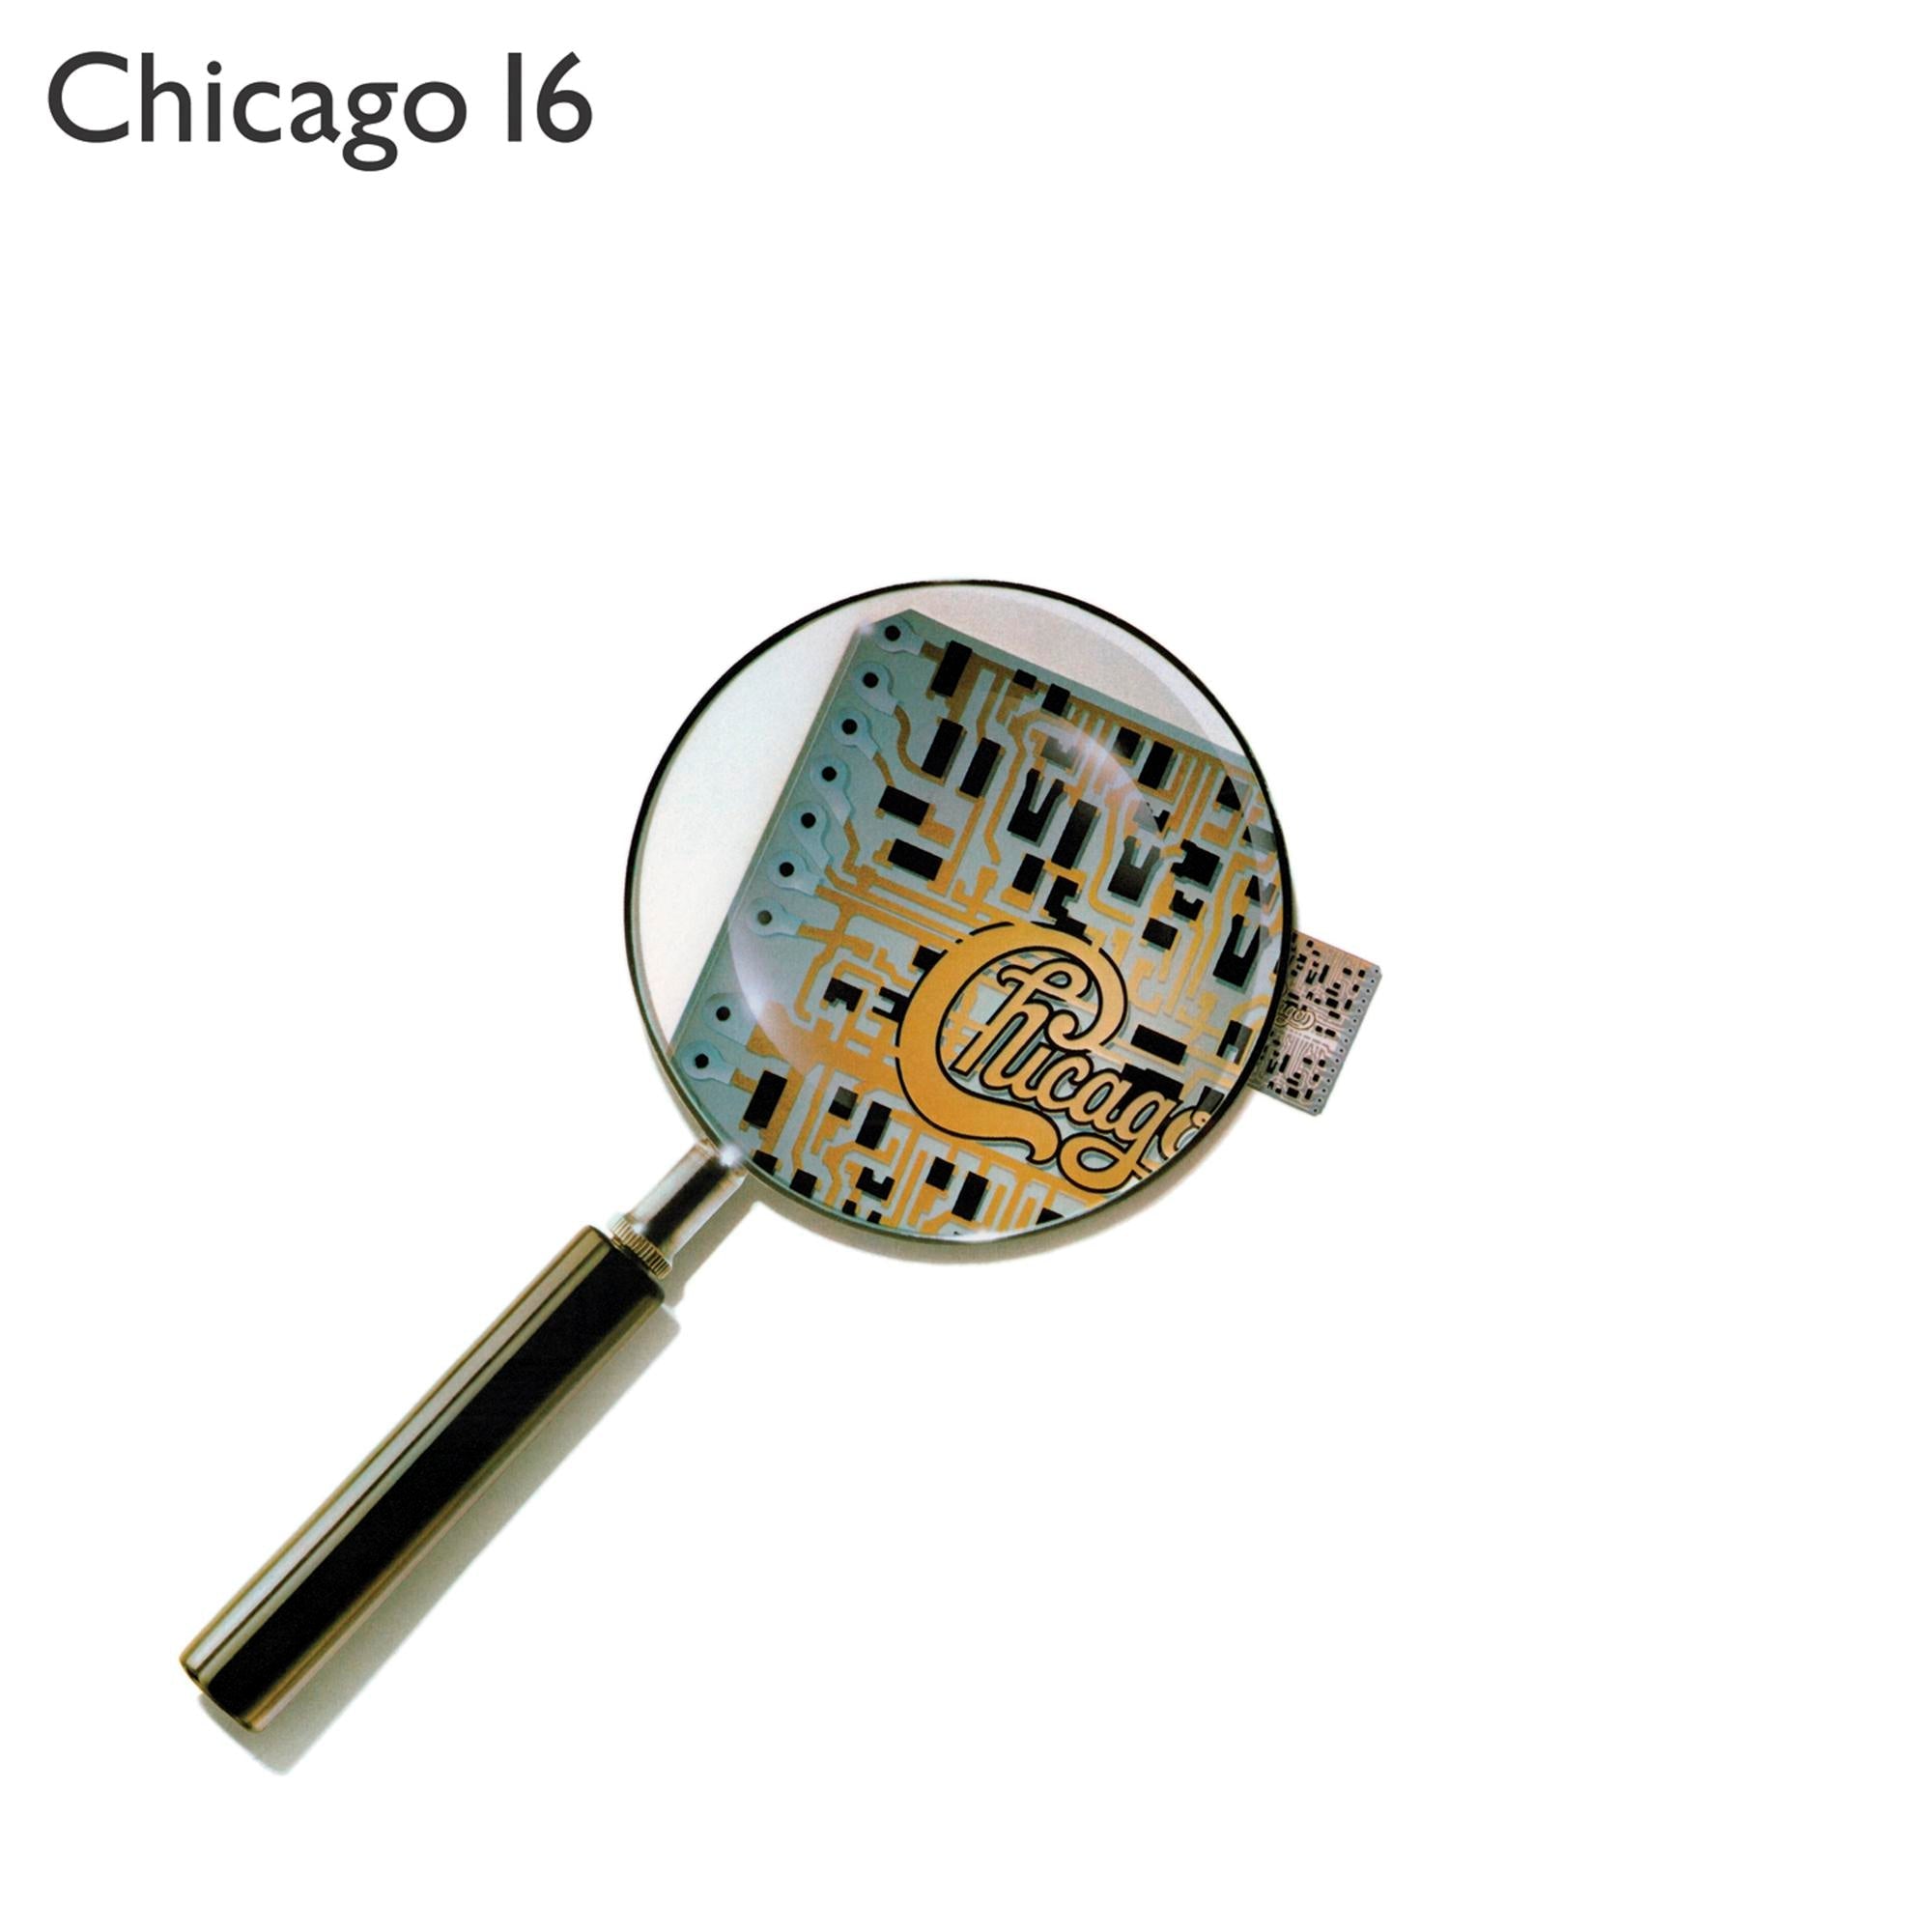 CHICAGO 'CHICAGO 16' 180 GRAM LIMITED EDITION LP